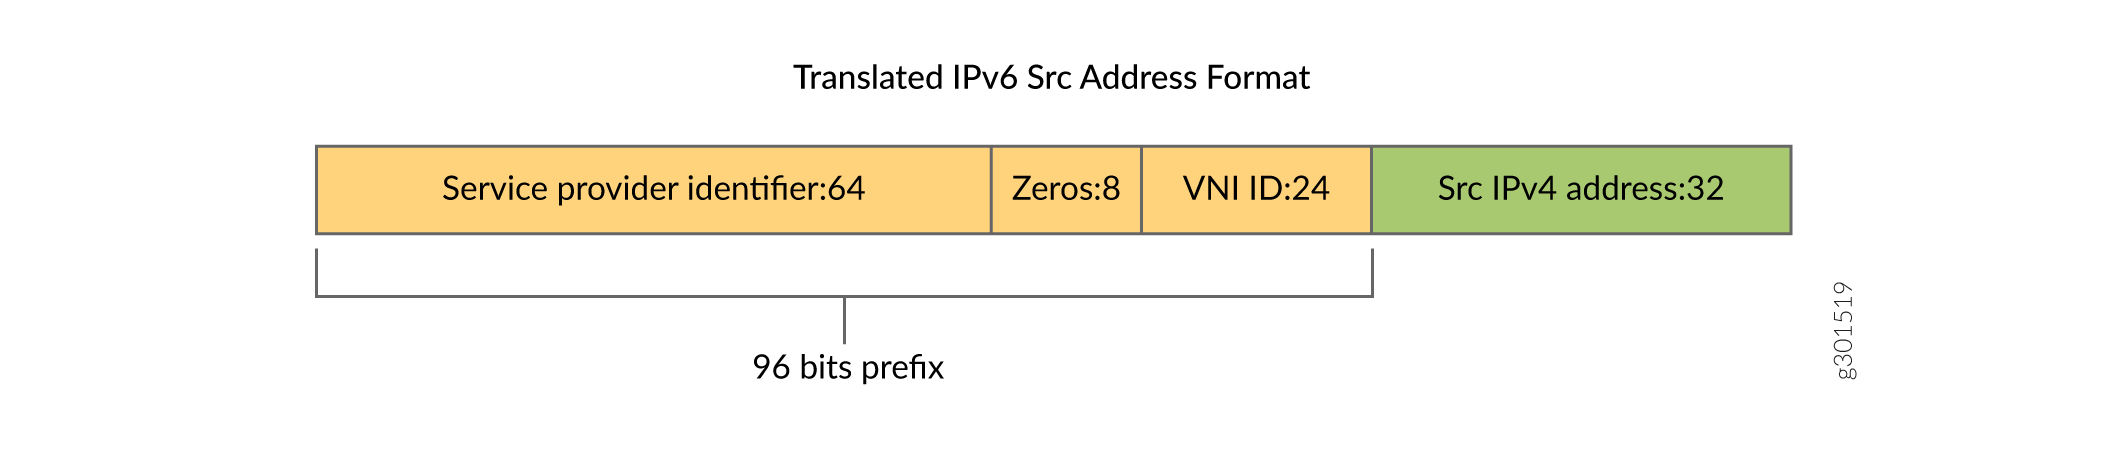 Translated IPv6 Source Address Format